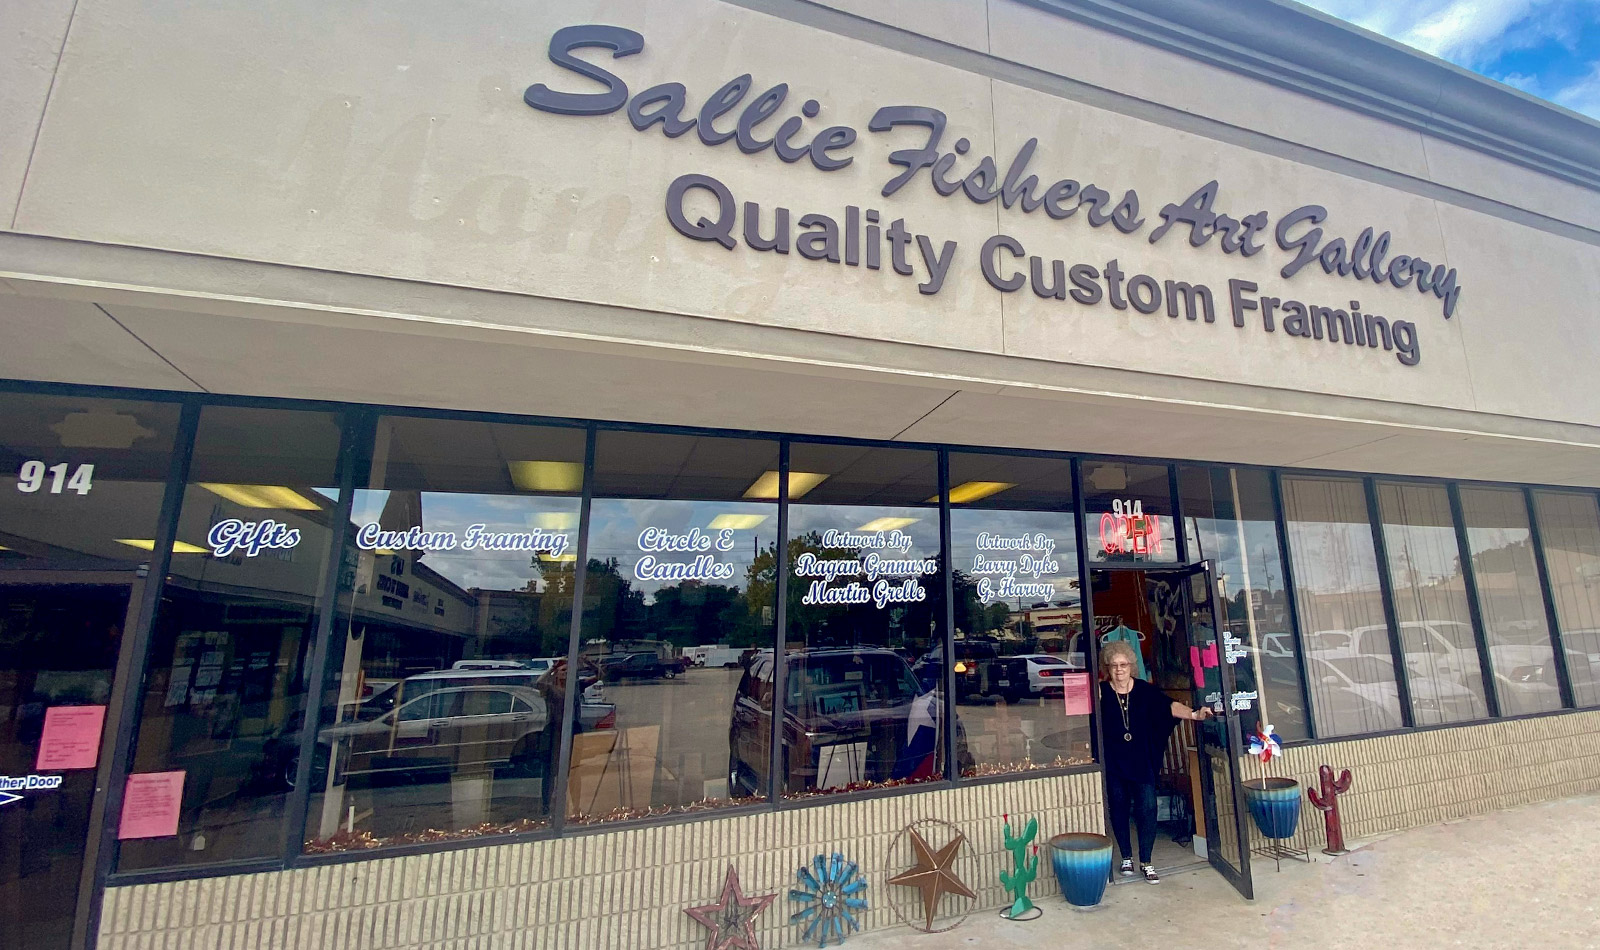 sallie-fishers-art-gallery-custom-framing-services